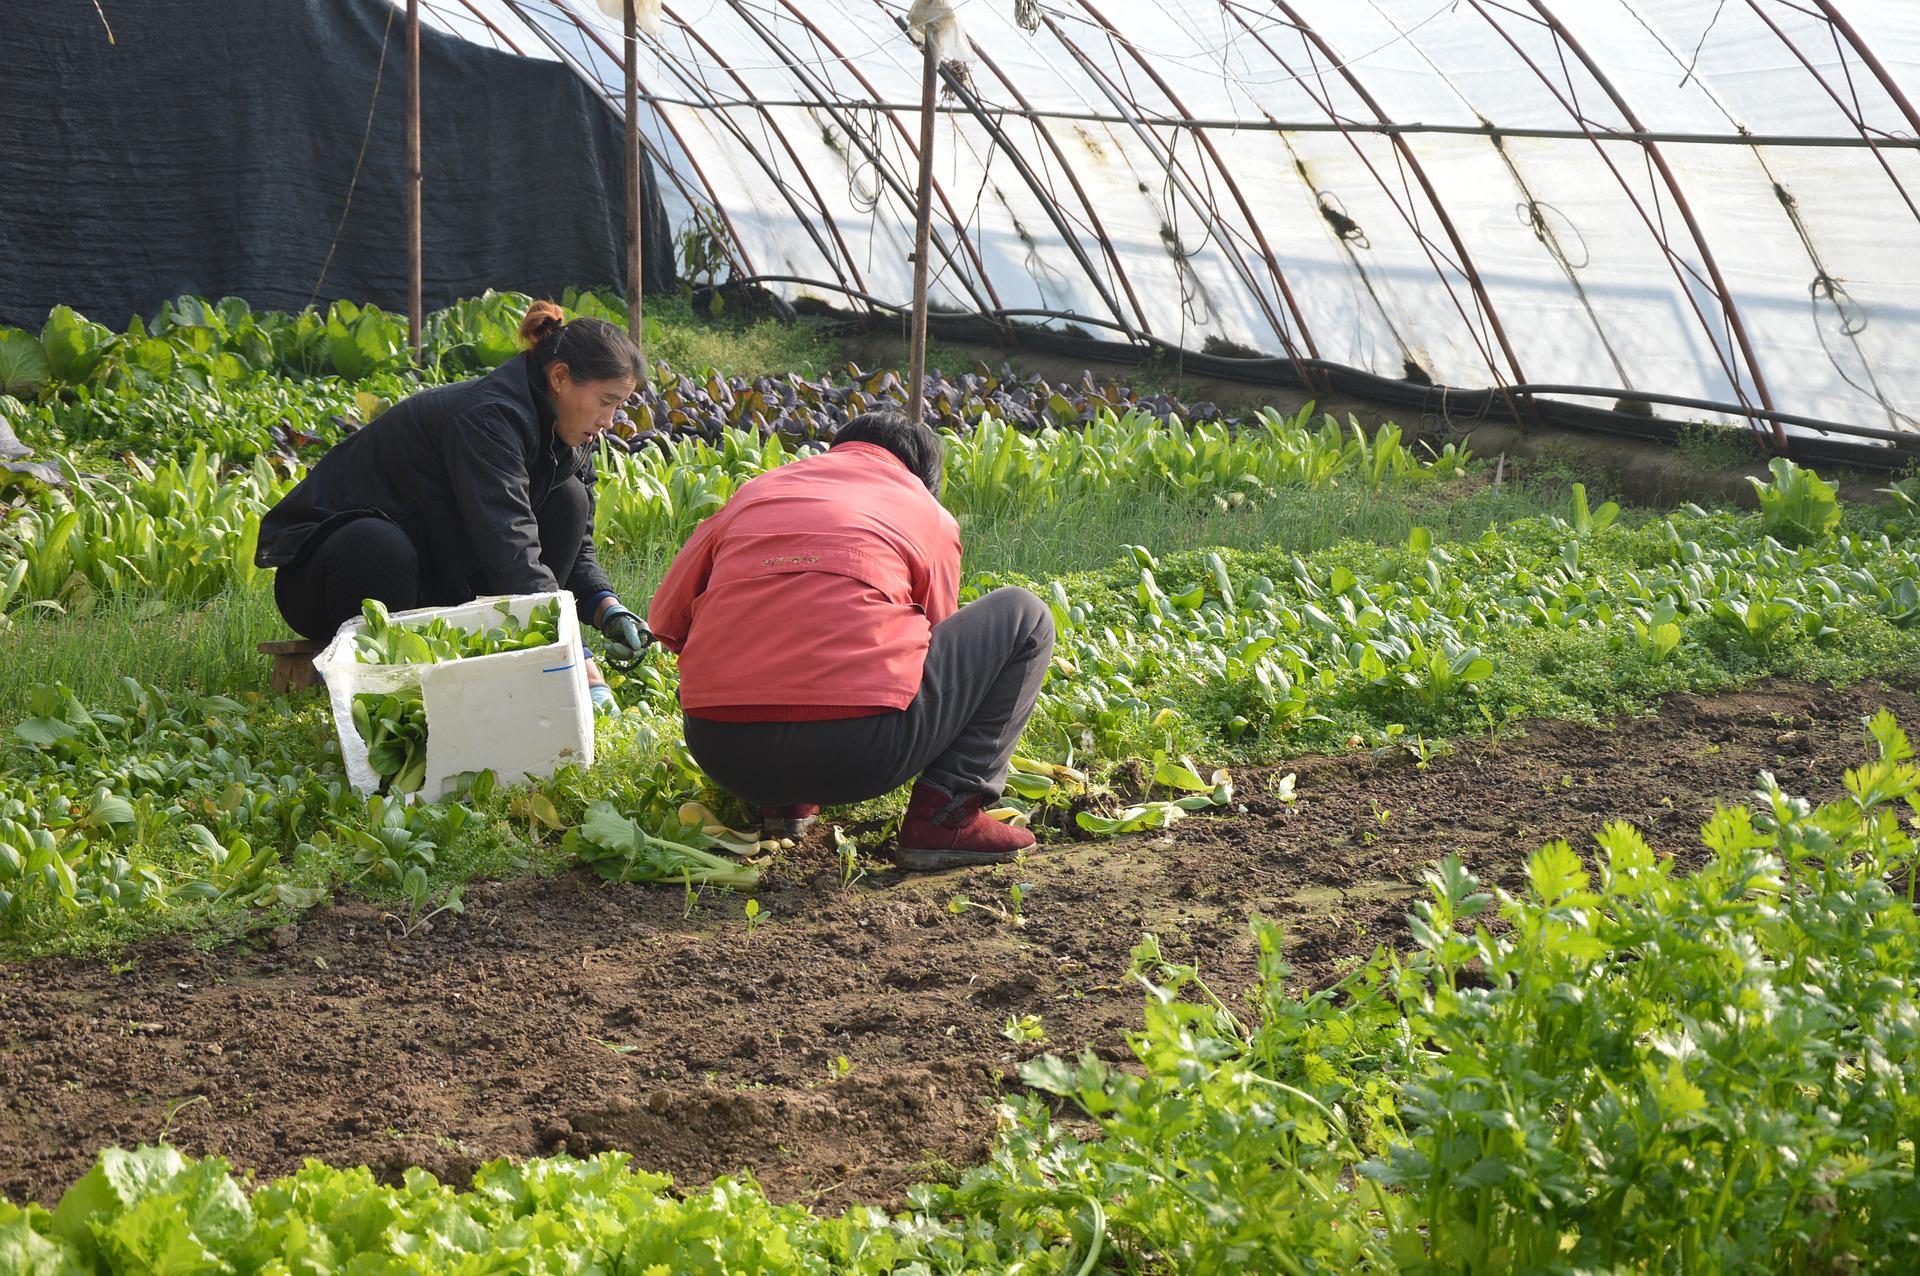 Women working in greenhouse